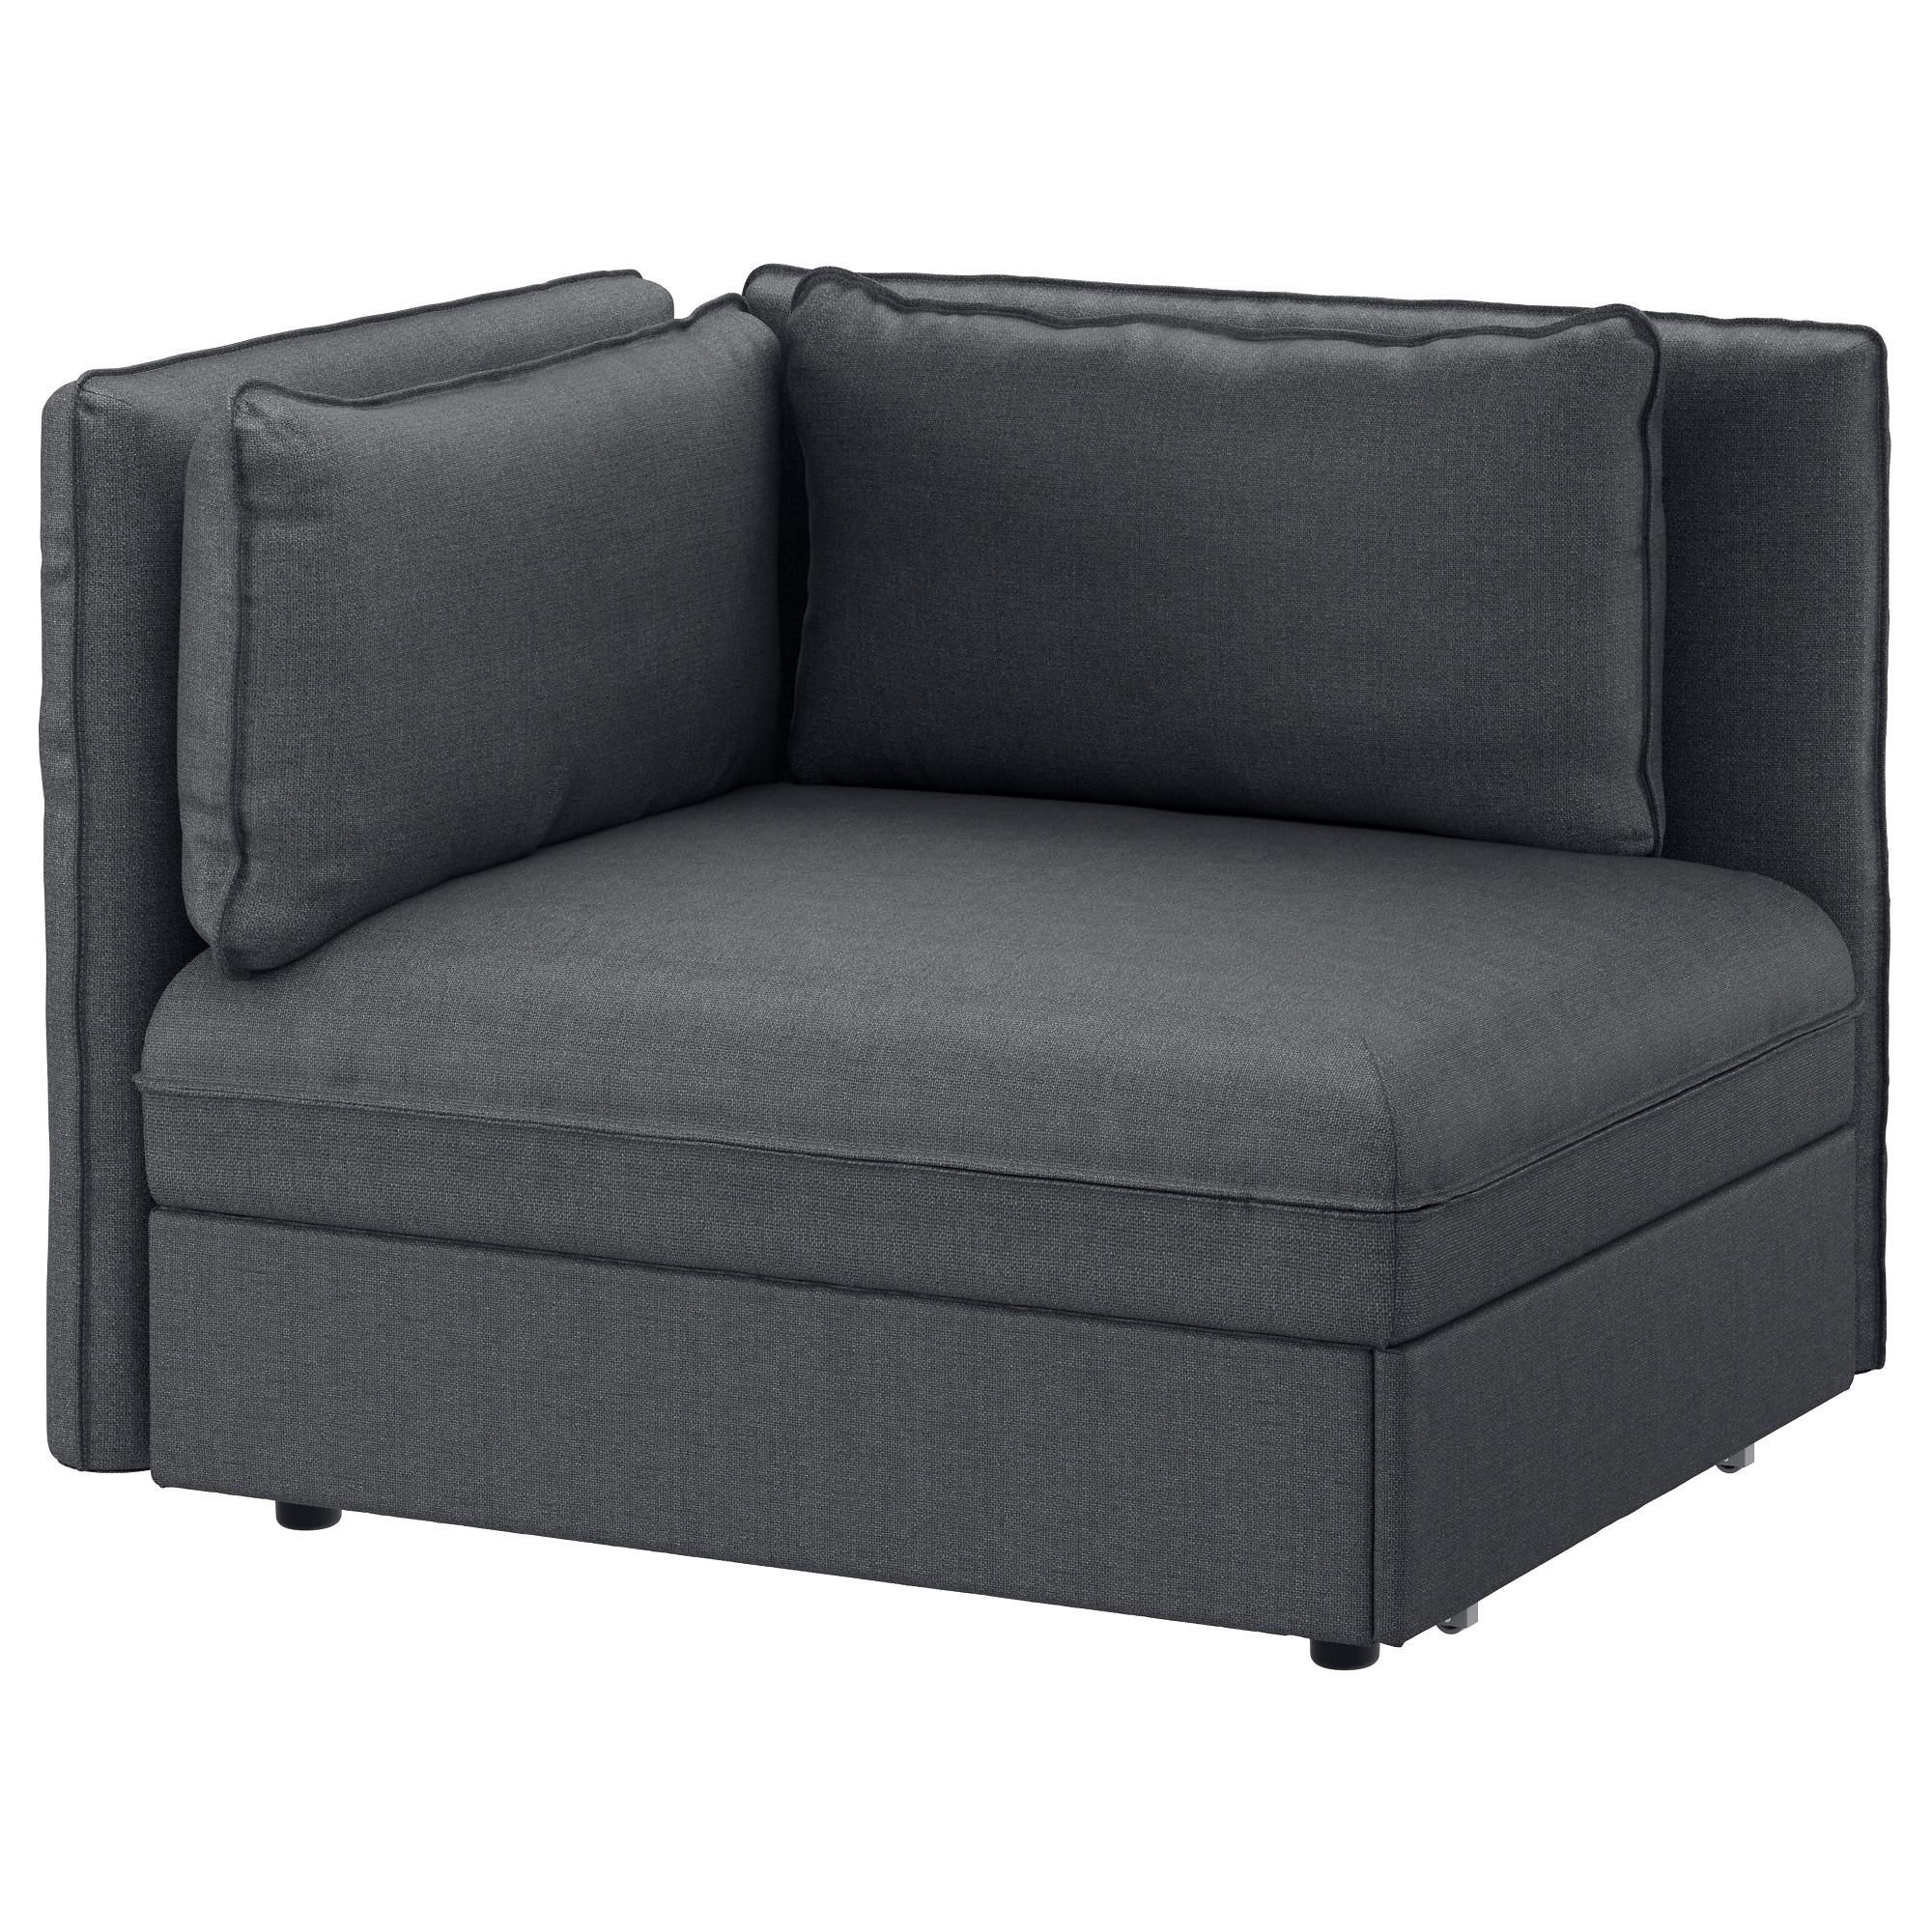 Sofa Beds & Futons – Ikea With Regard To Ikea Sectional Sleeper Sofa (View 8 of 20)